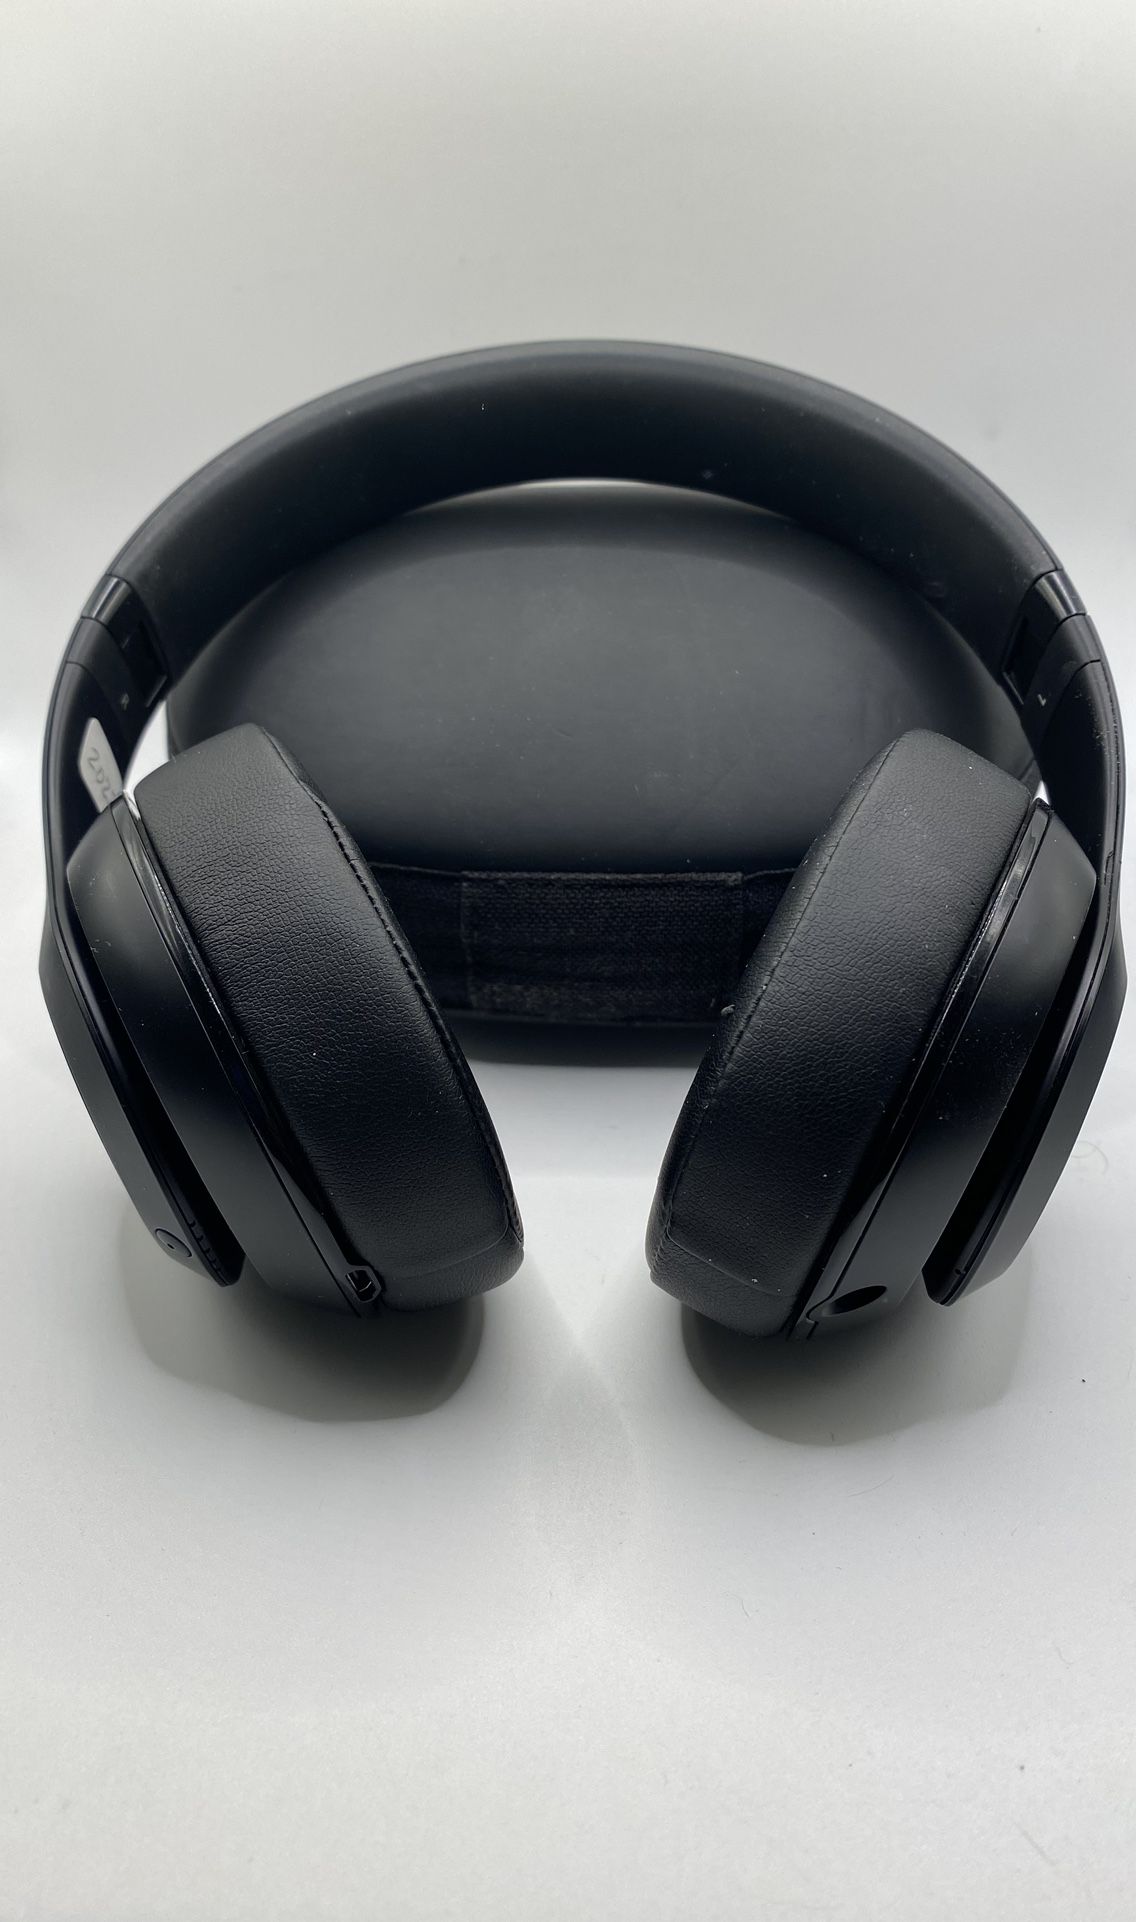 (Authentic) Matte Black Beats Studio Bluetooth Wireless Headphones With Noise Canceling #2027